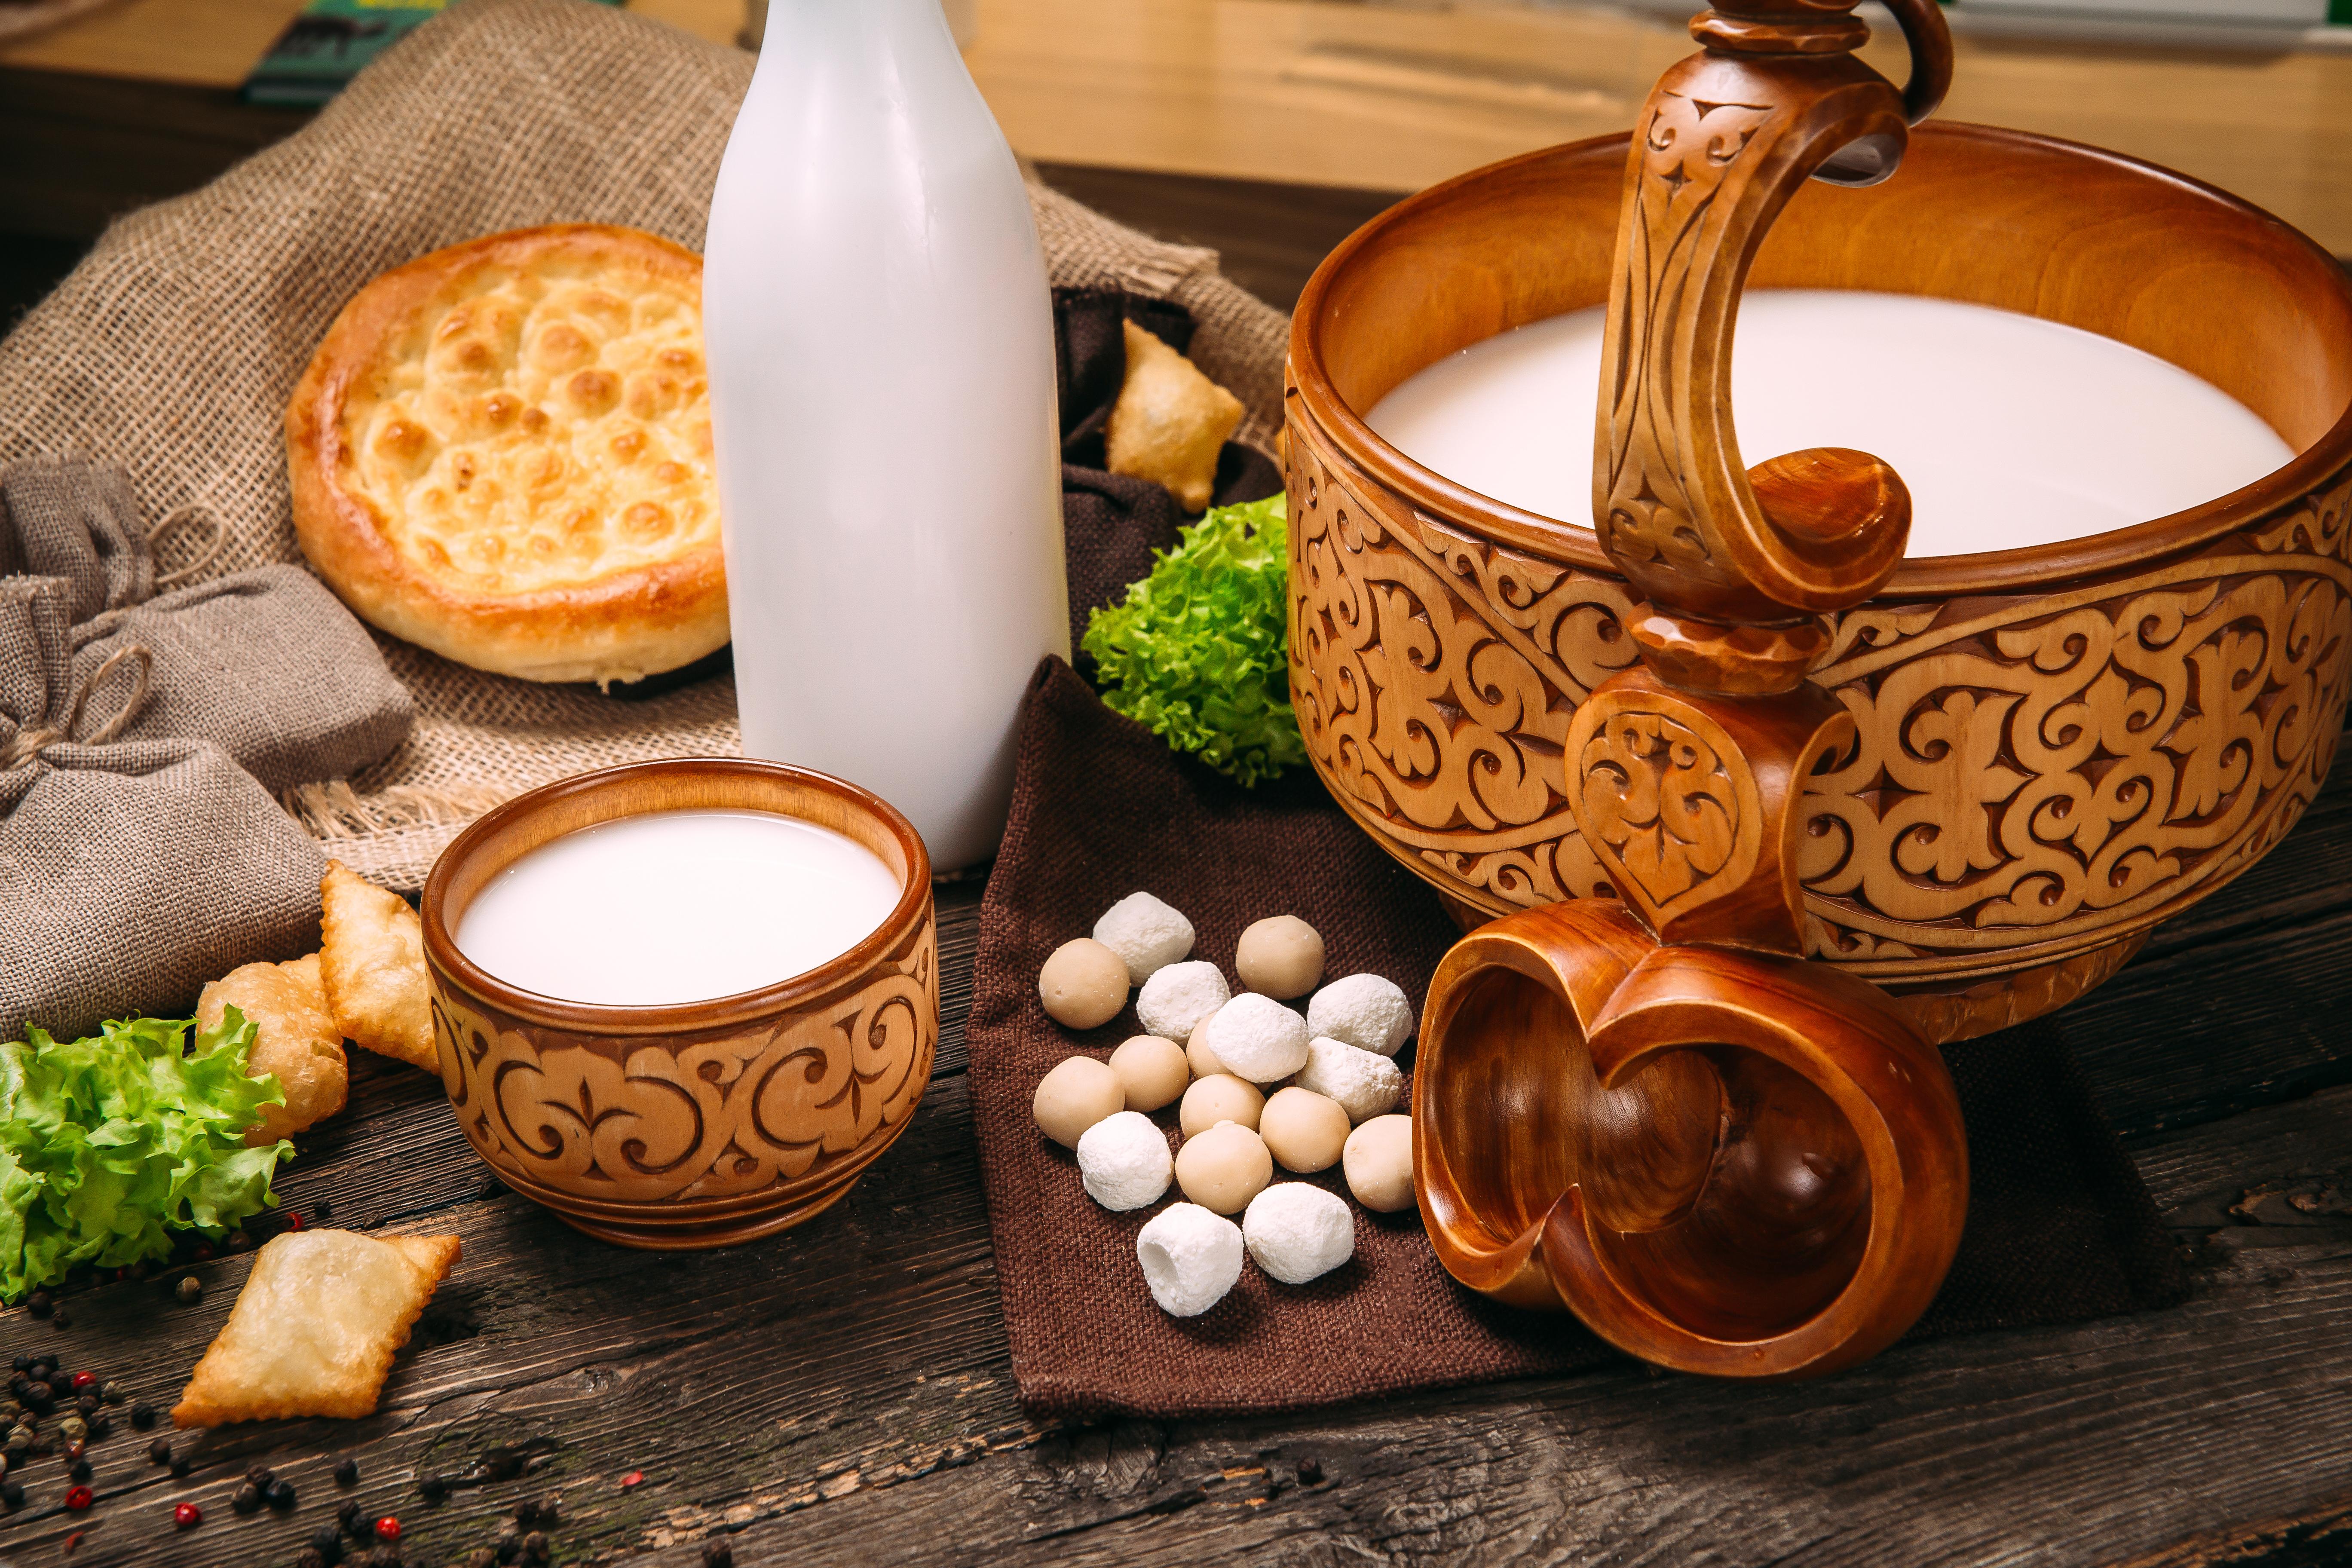 A traditional spread containing Subat © Hihitetlin / Shutterstock